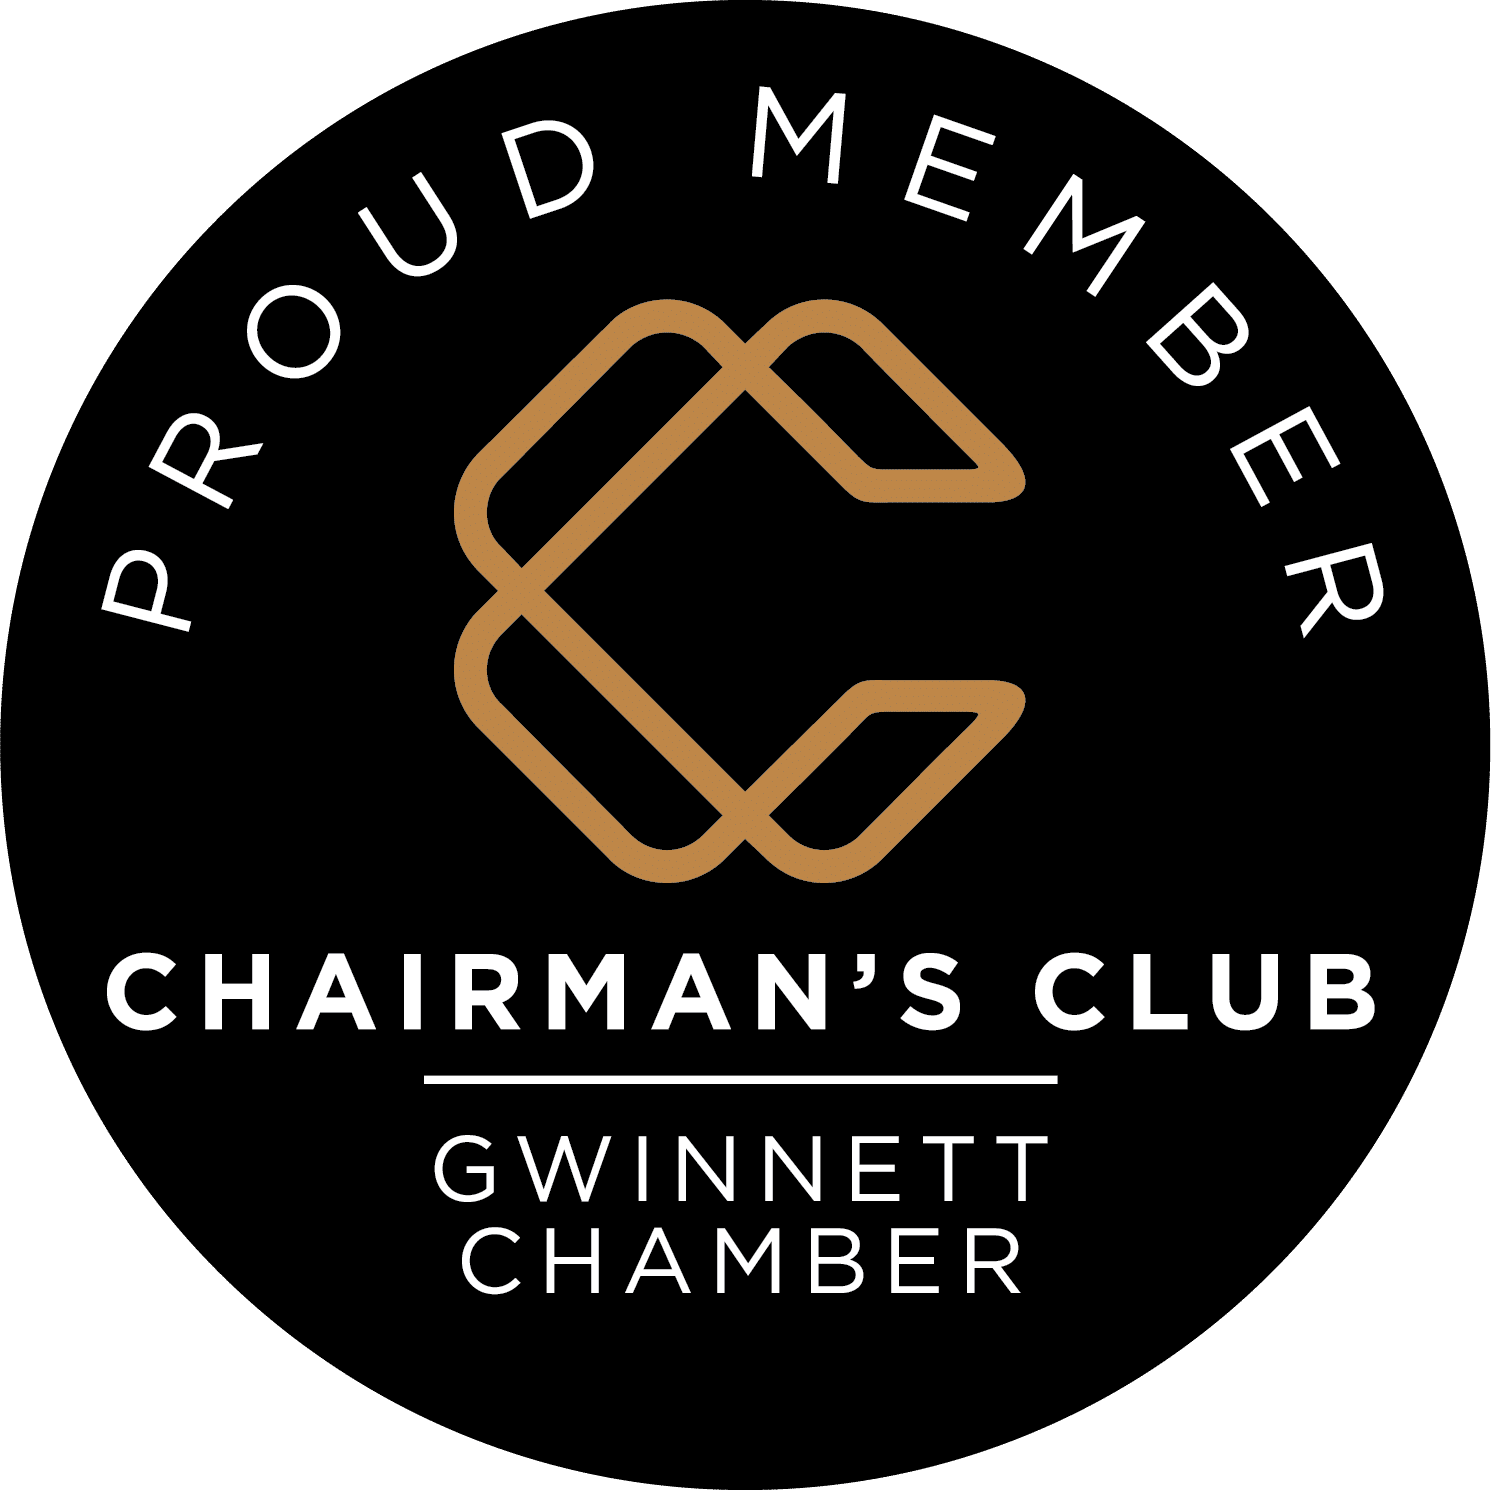 Gwinnett Chamber Chairman's Club